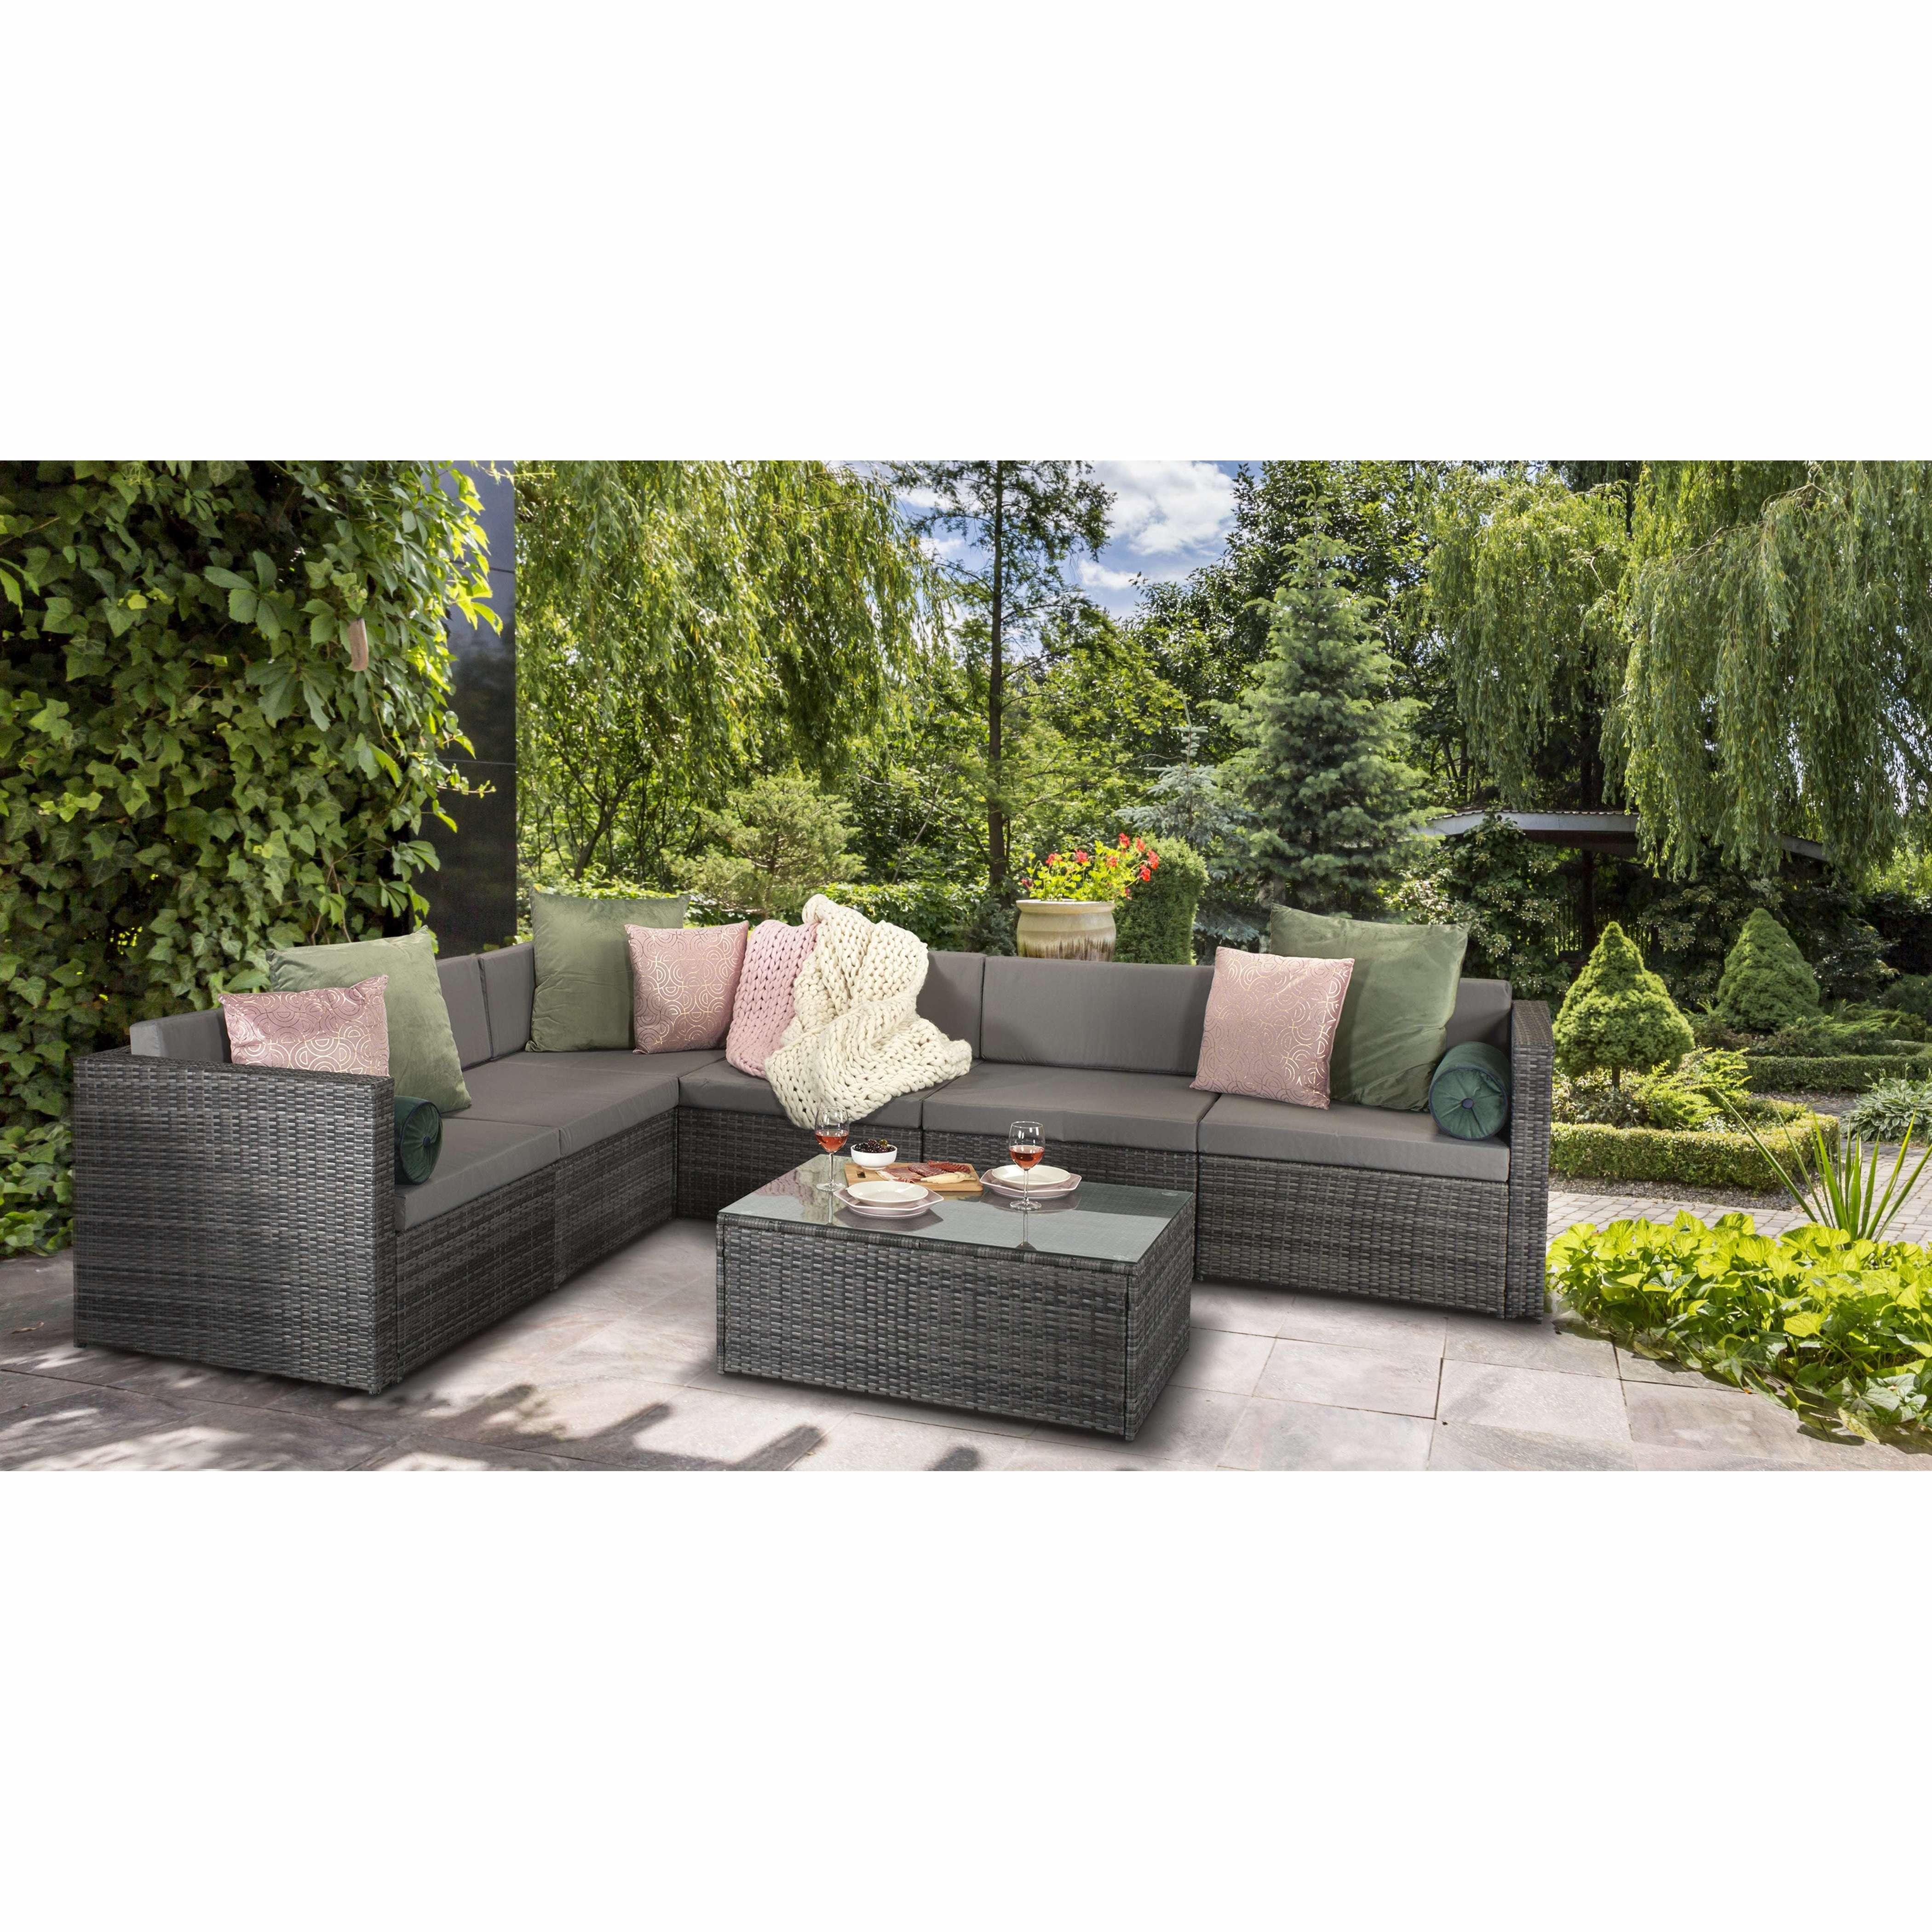 Exceptional Garden:Signature Weave Evie Modular Rattan Sofa Set in Mixed Grey